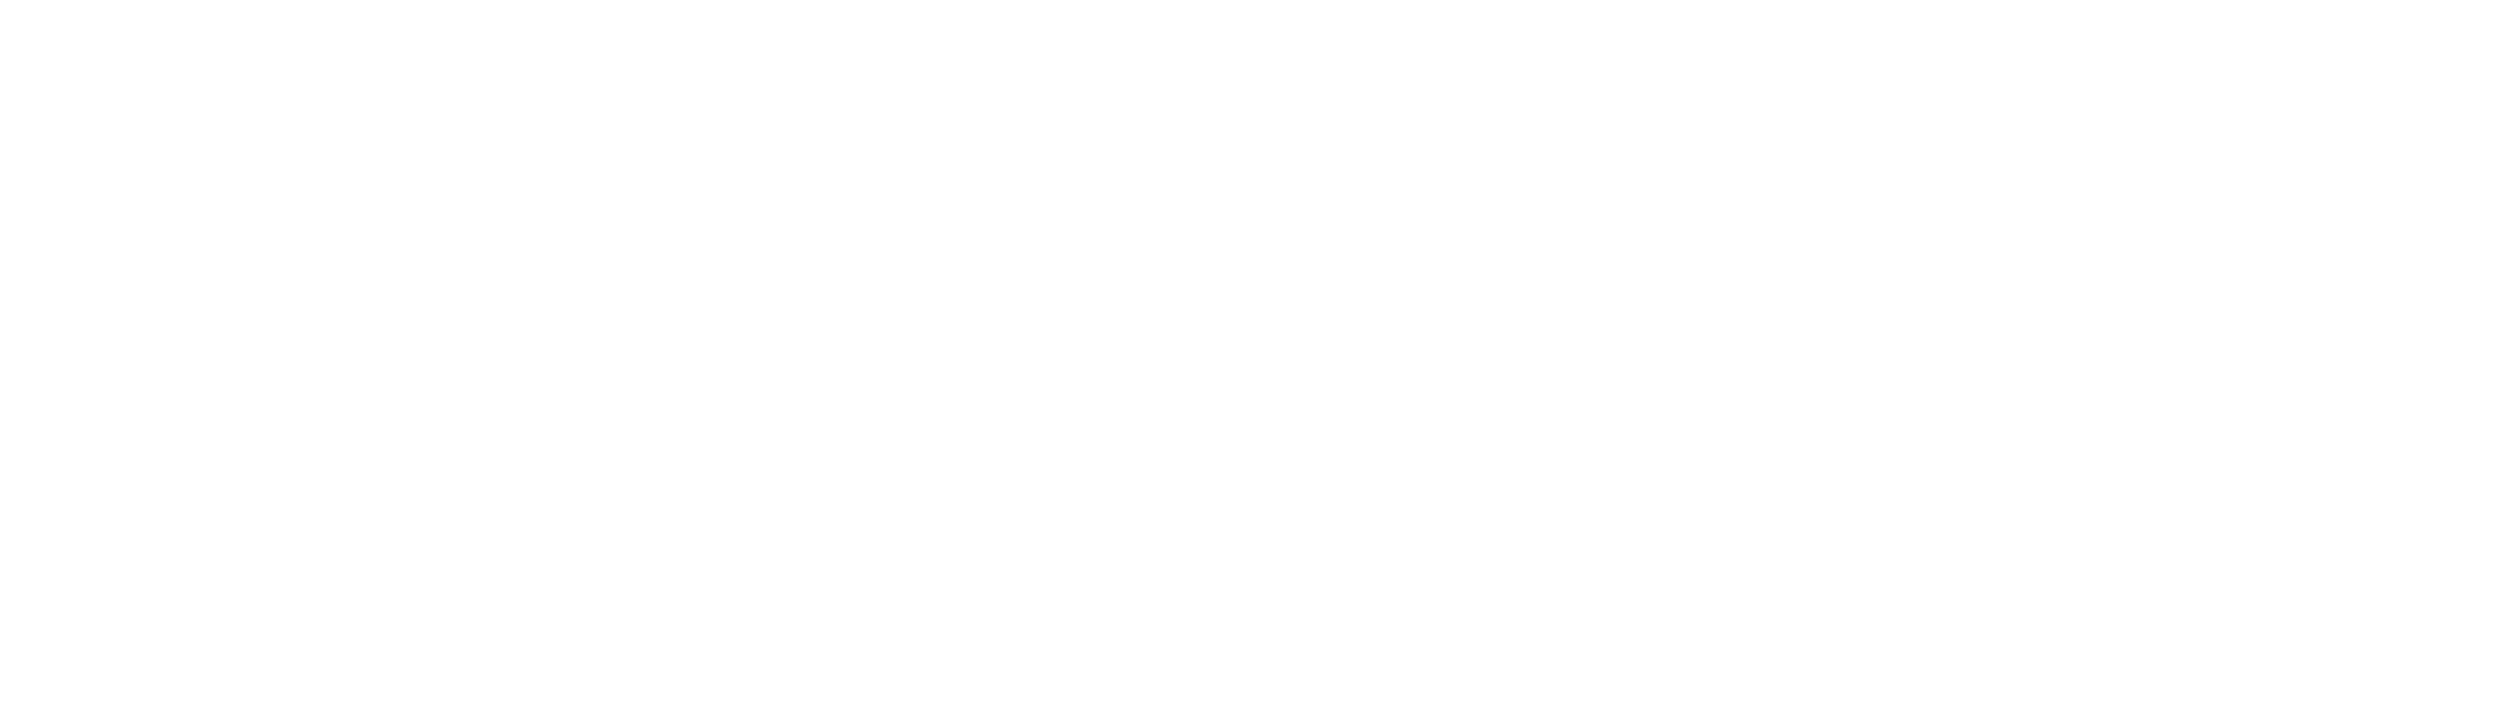 SANTANGELO CONSTRUCTION